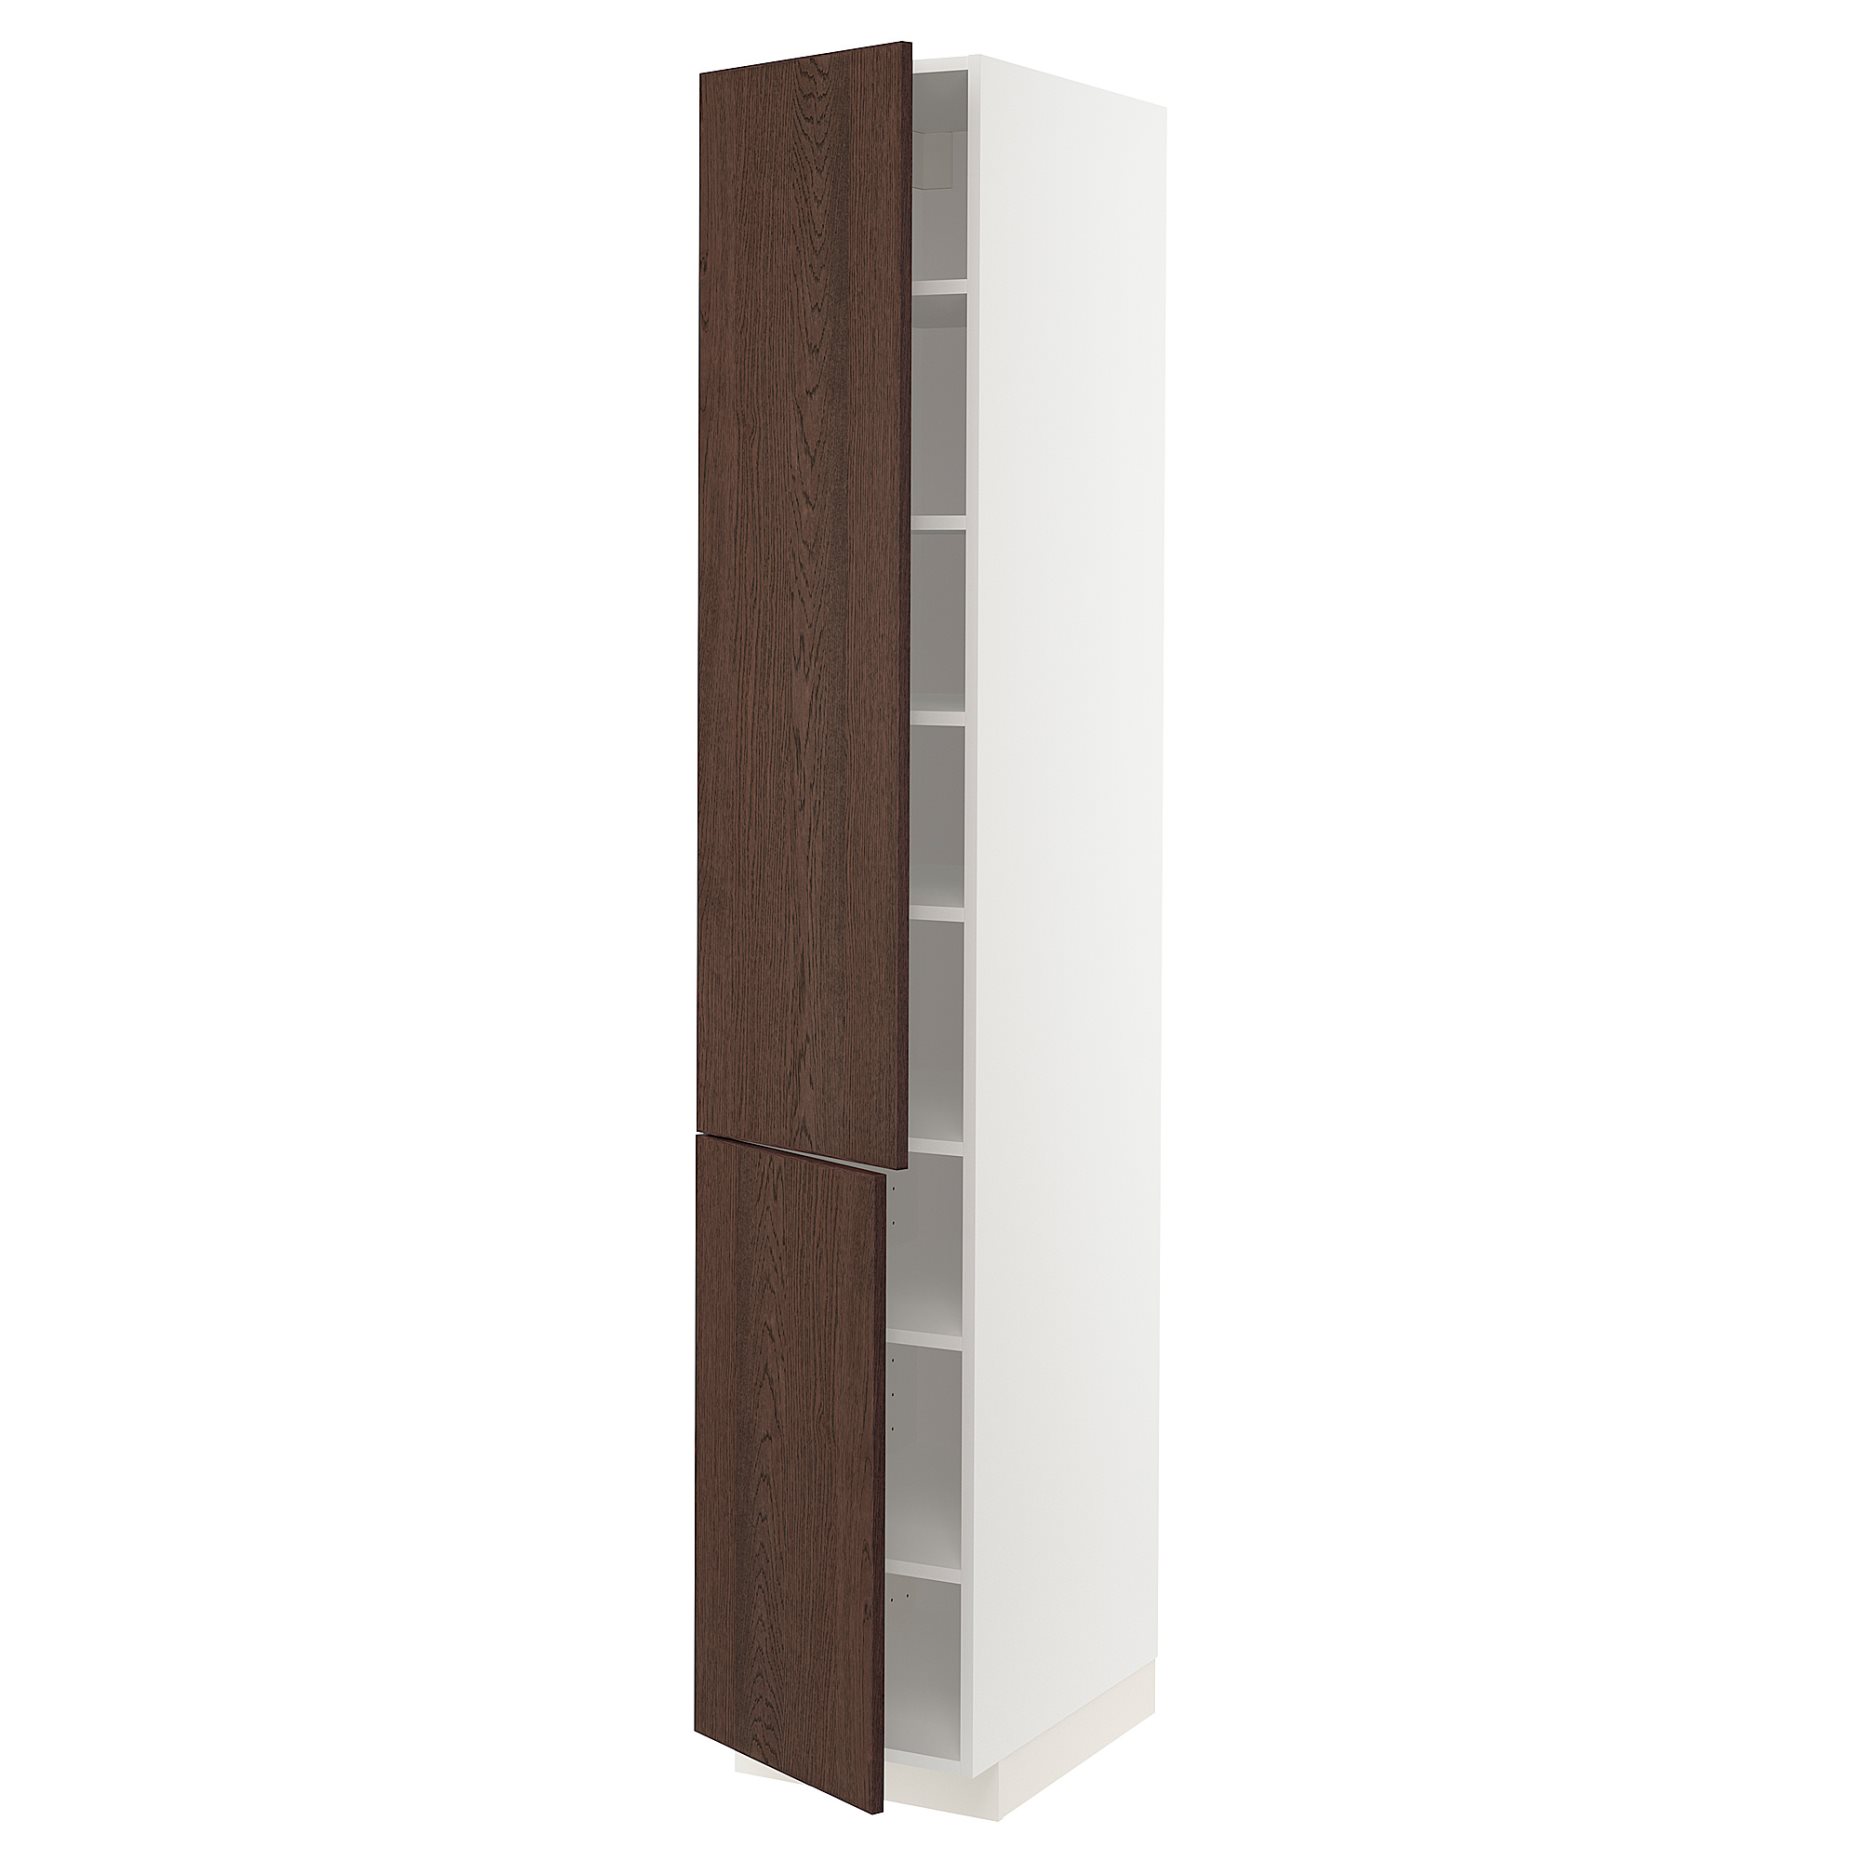 METOD, ψηλό ντουλάπι με ράφια/2 πόρτες, 40x60x220 cm, 694.617.15